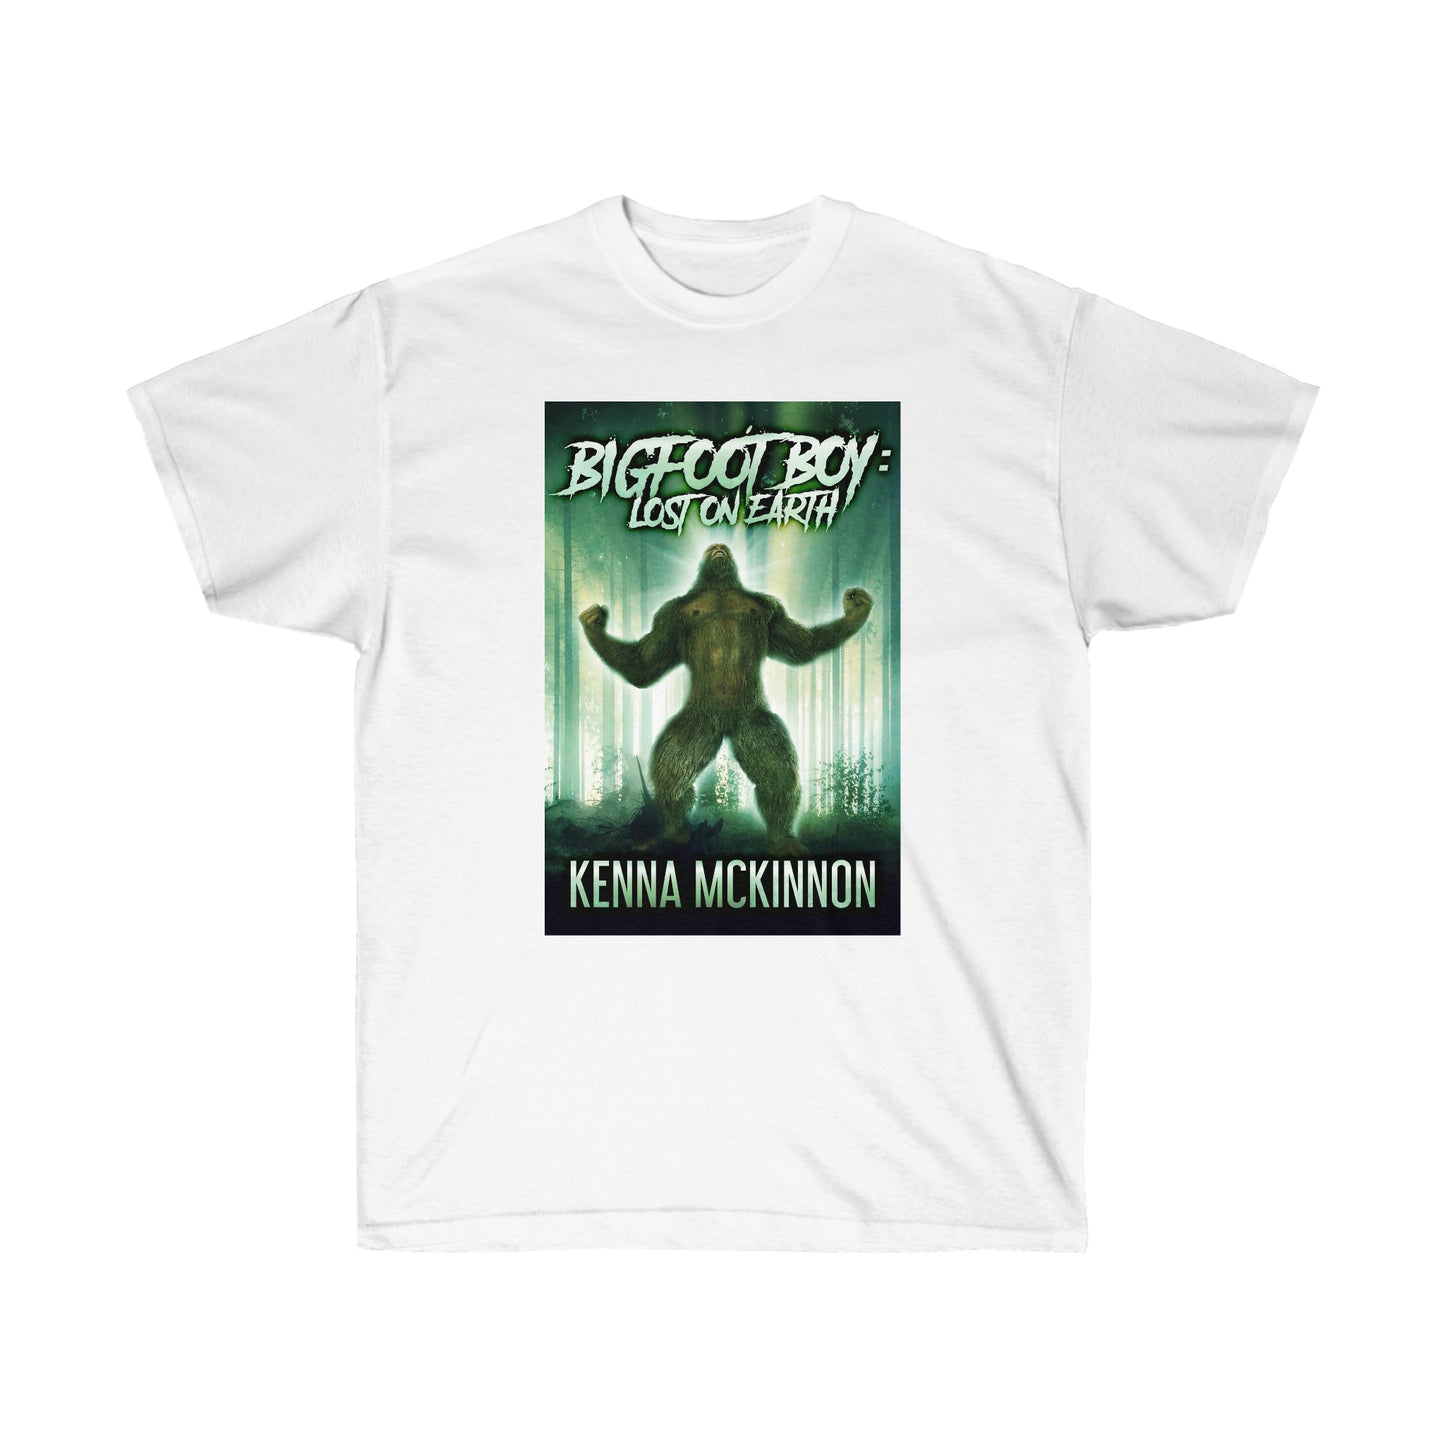 Bigfoot Boy - Unisex T-Shirt